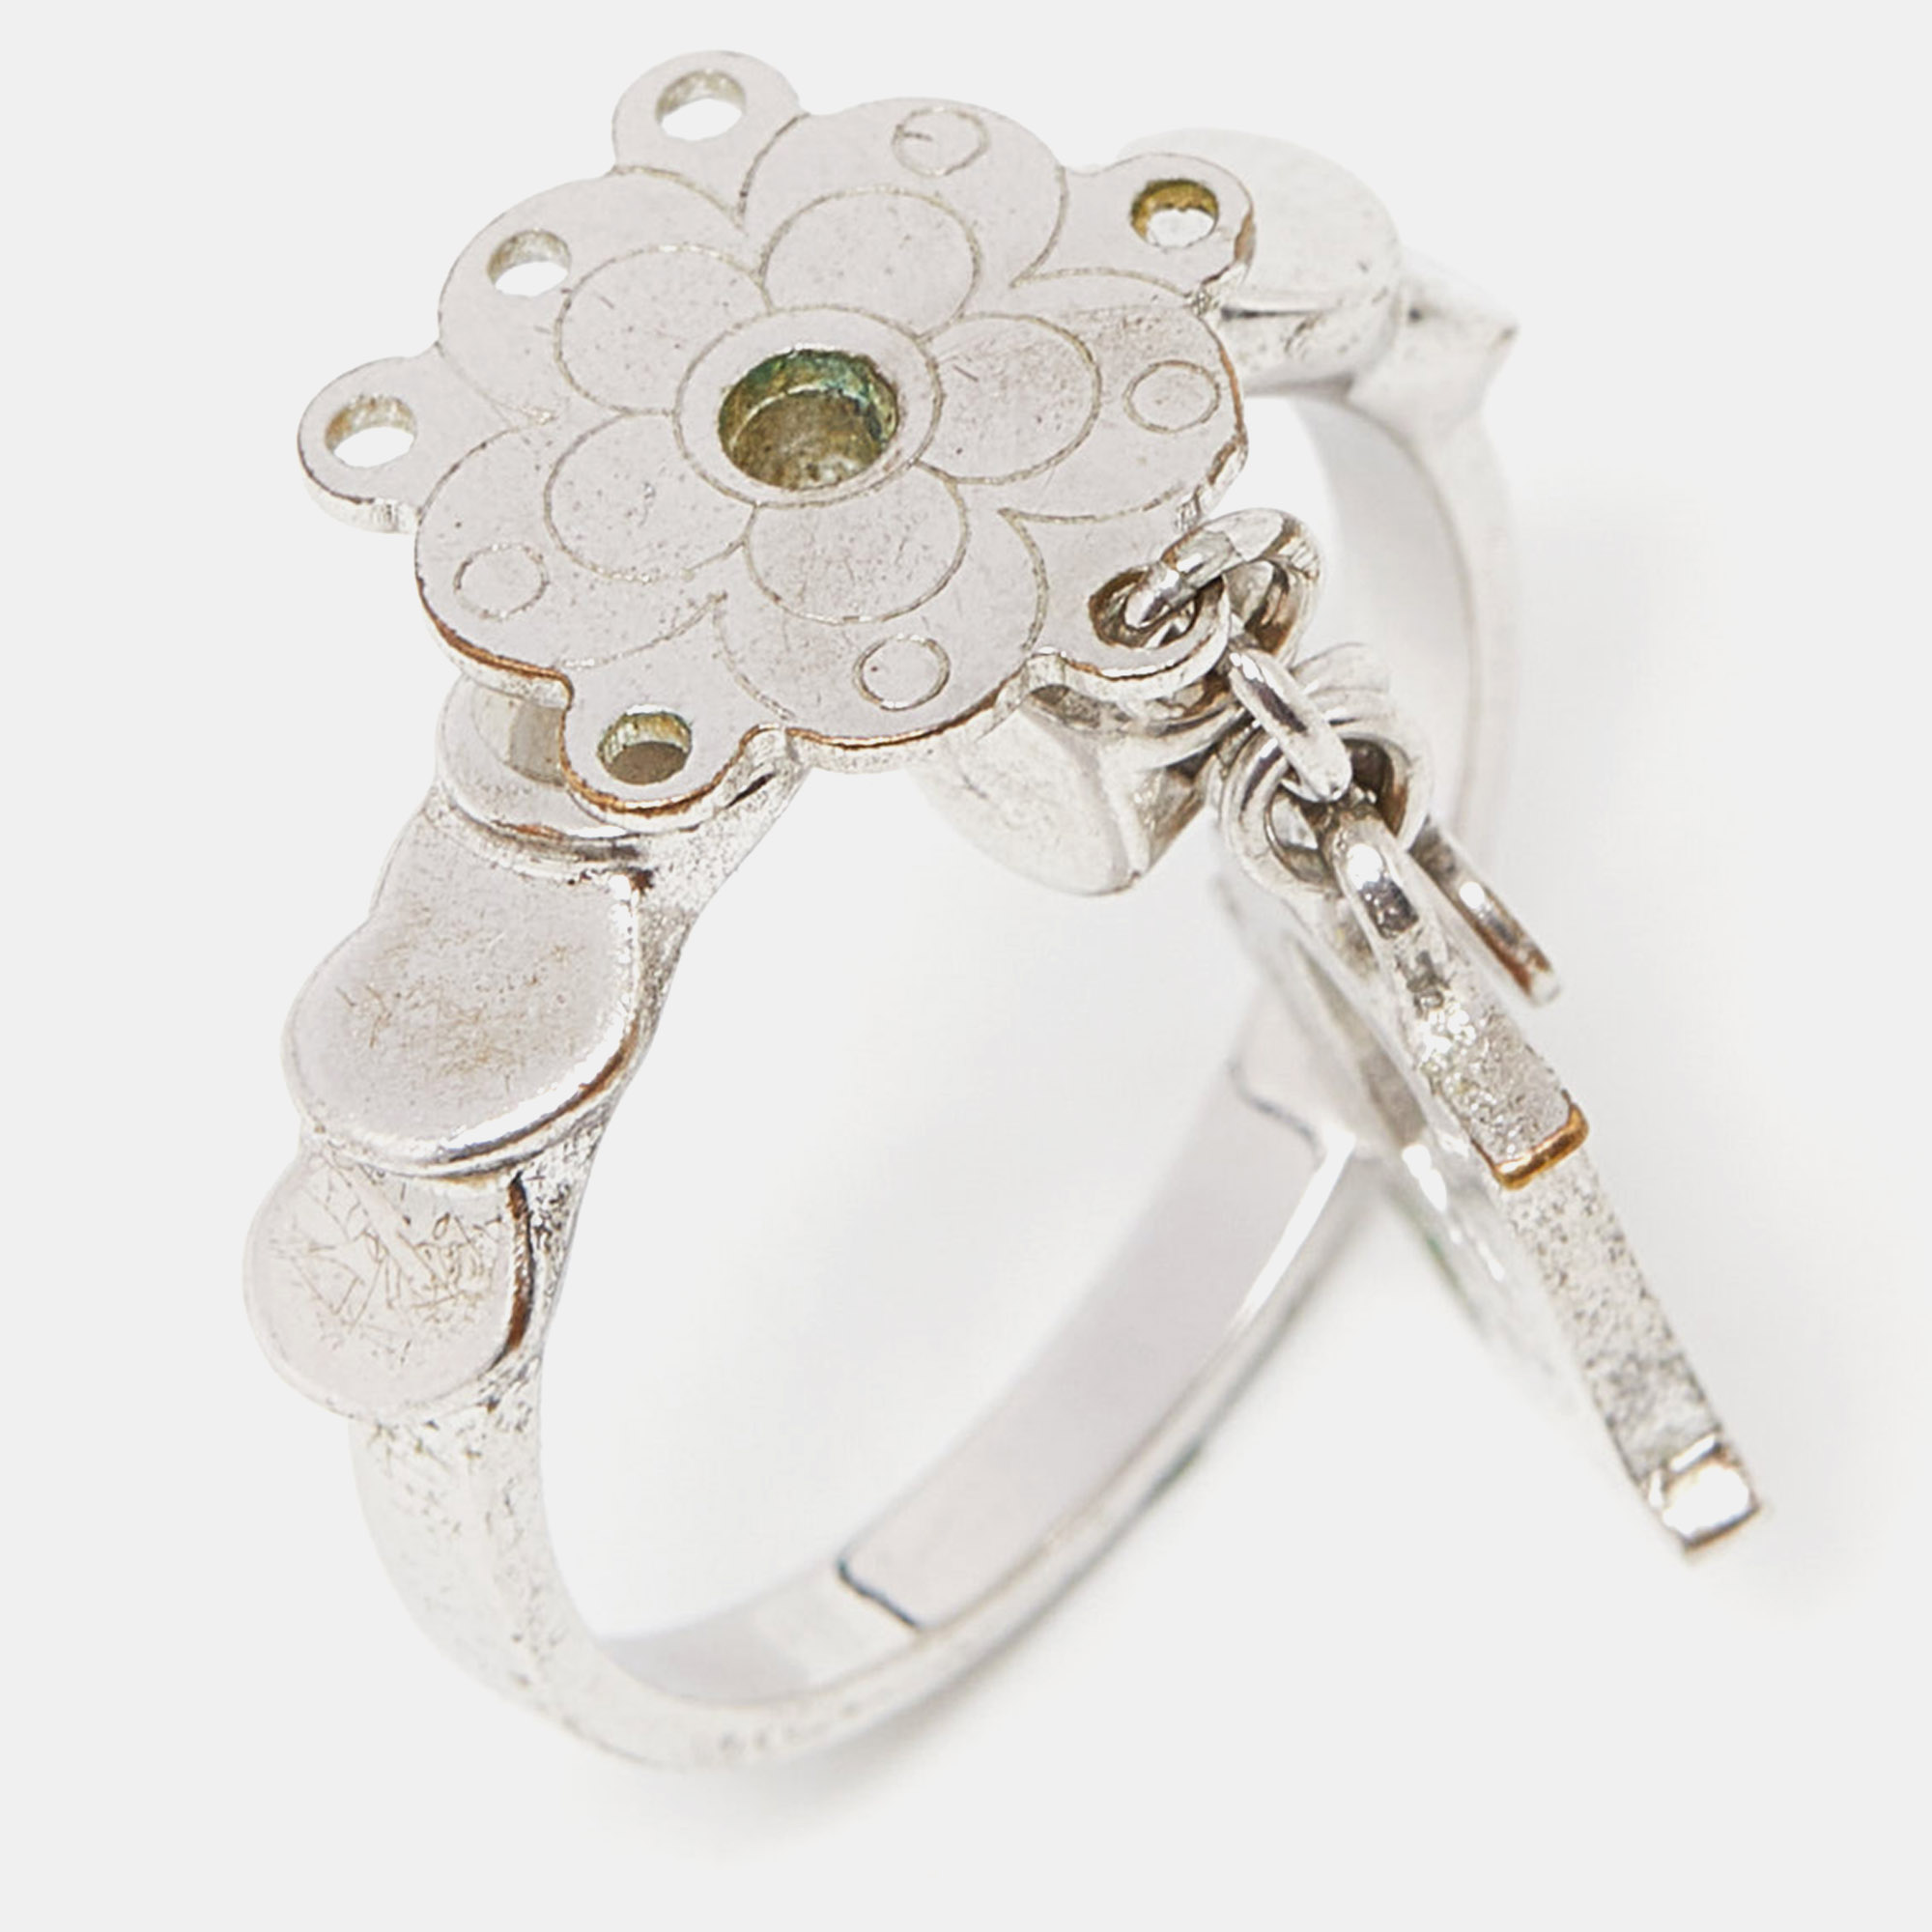 Dior bague enamel crystal silver tone charm ring size 52